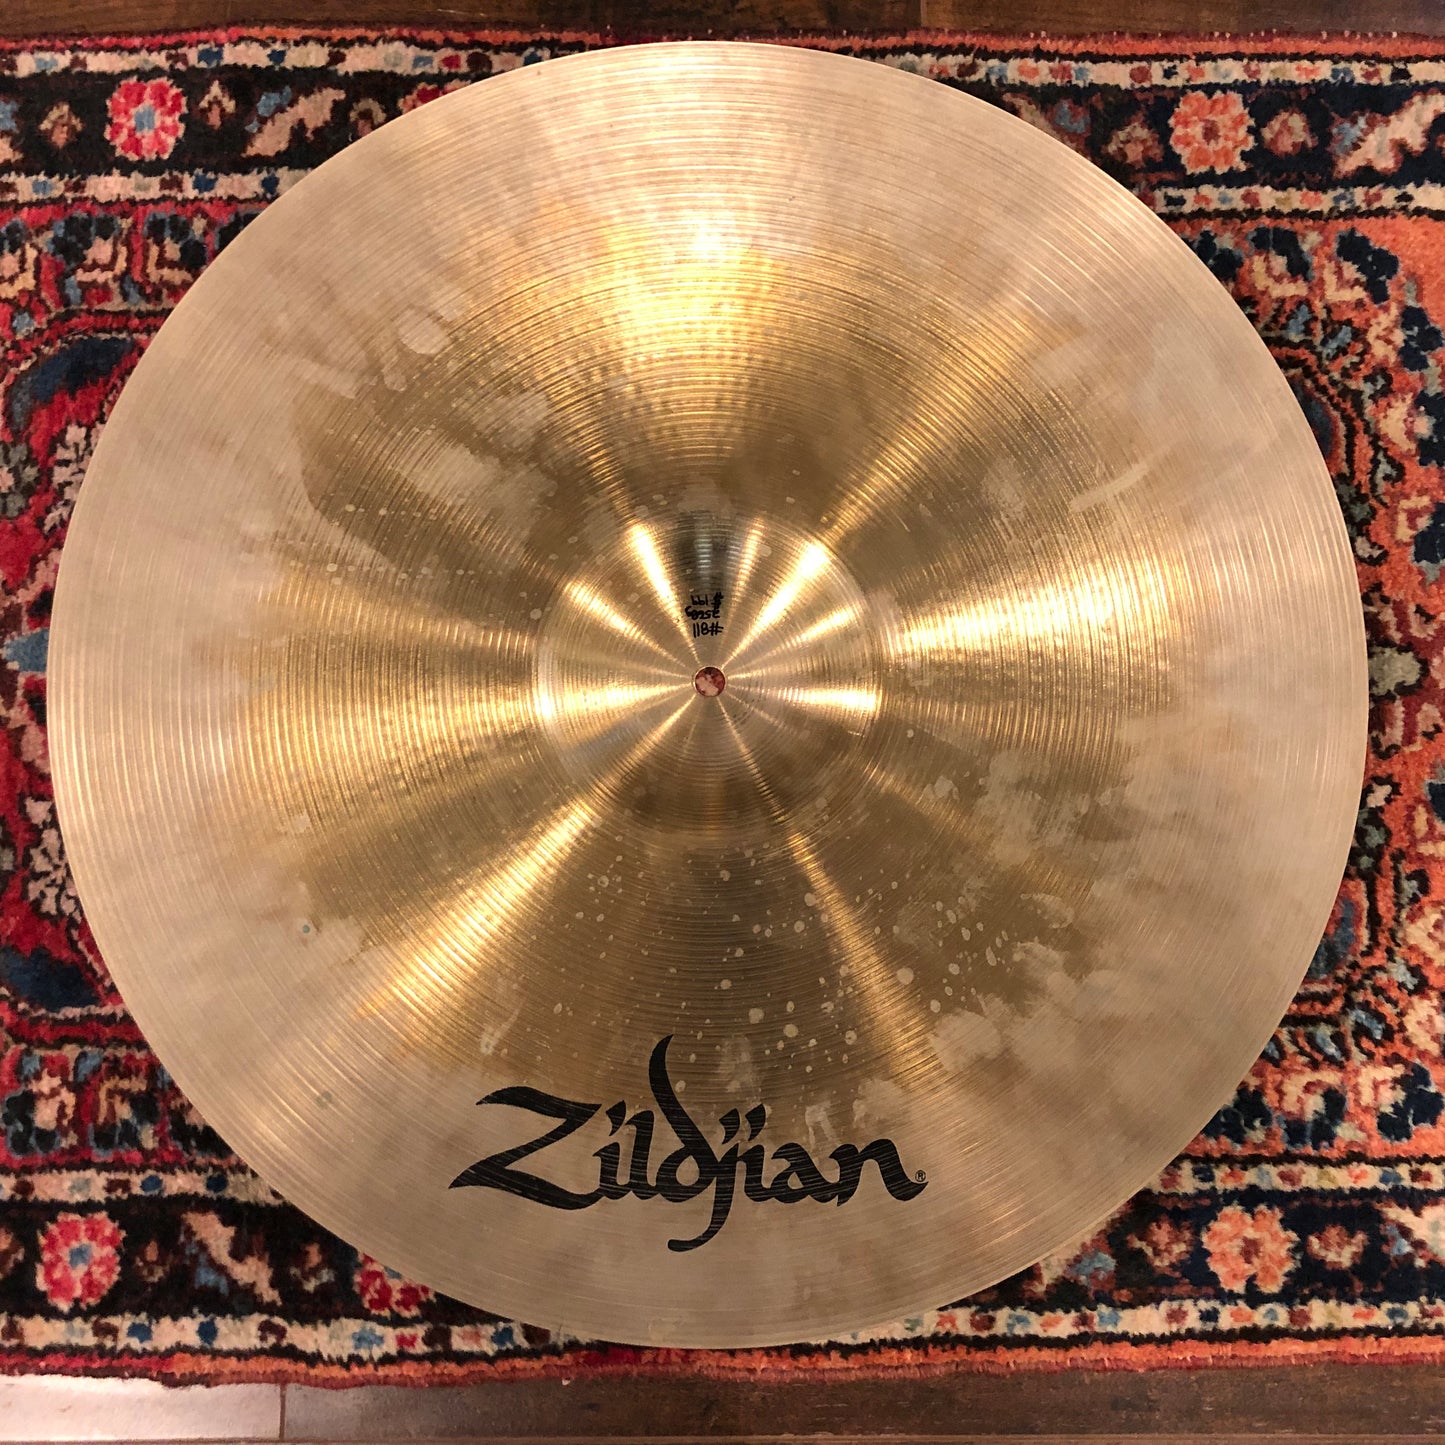 21" Zildjian A Sweet Ride Cymbal 2568g #811